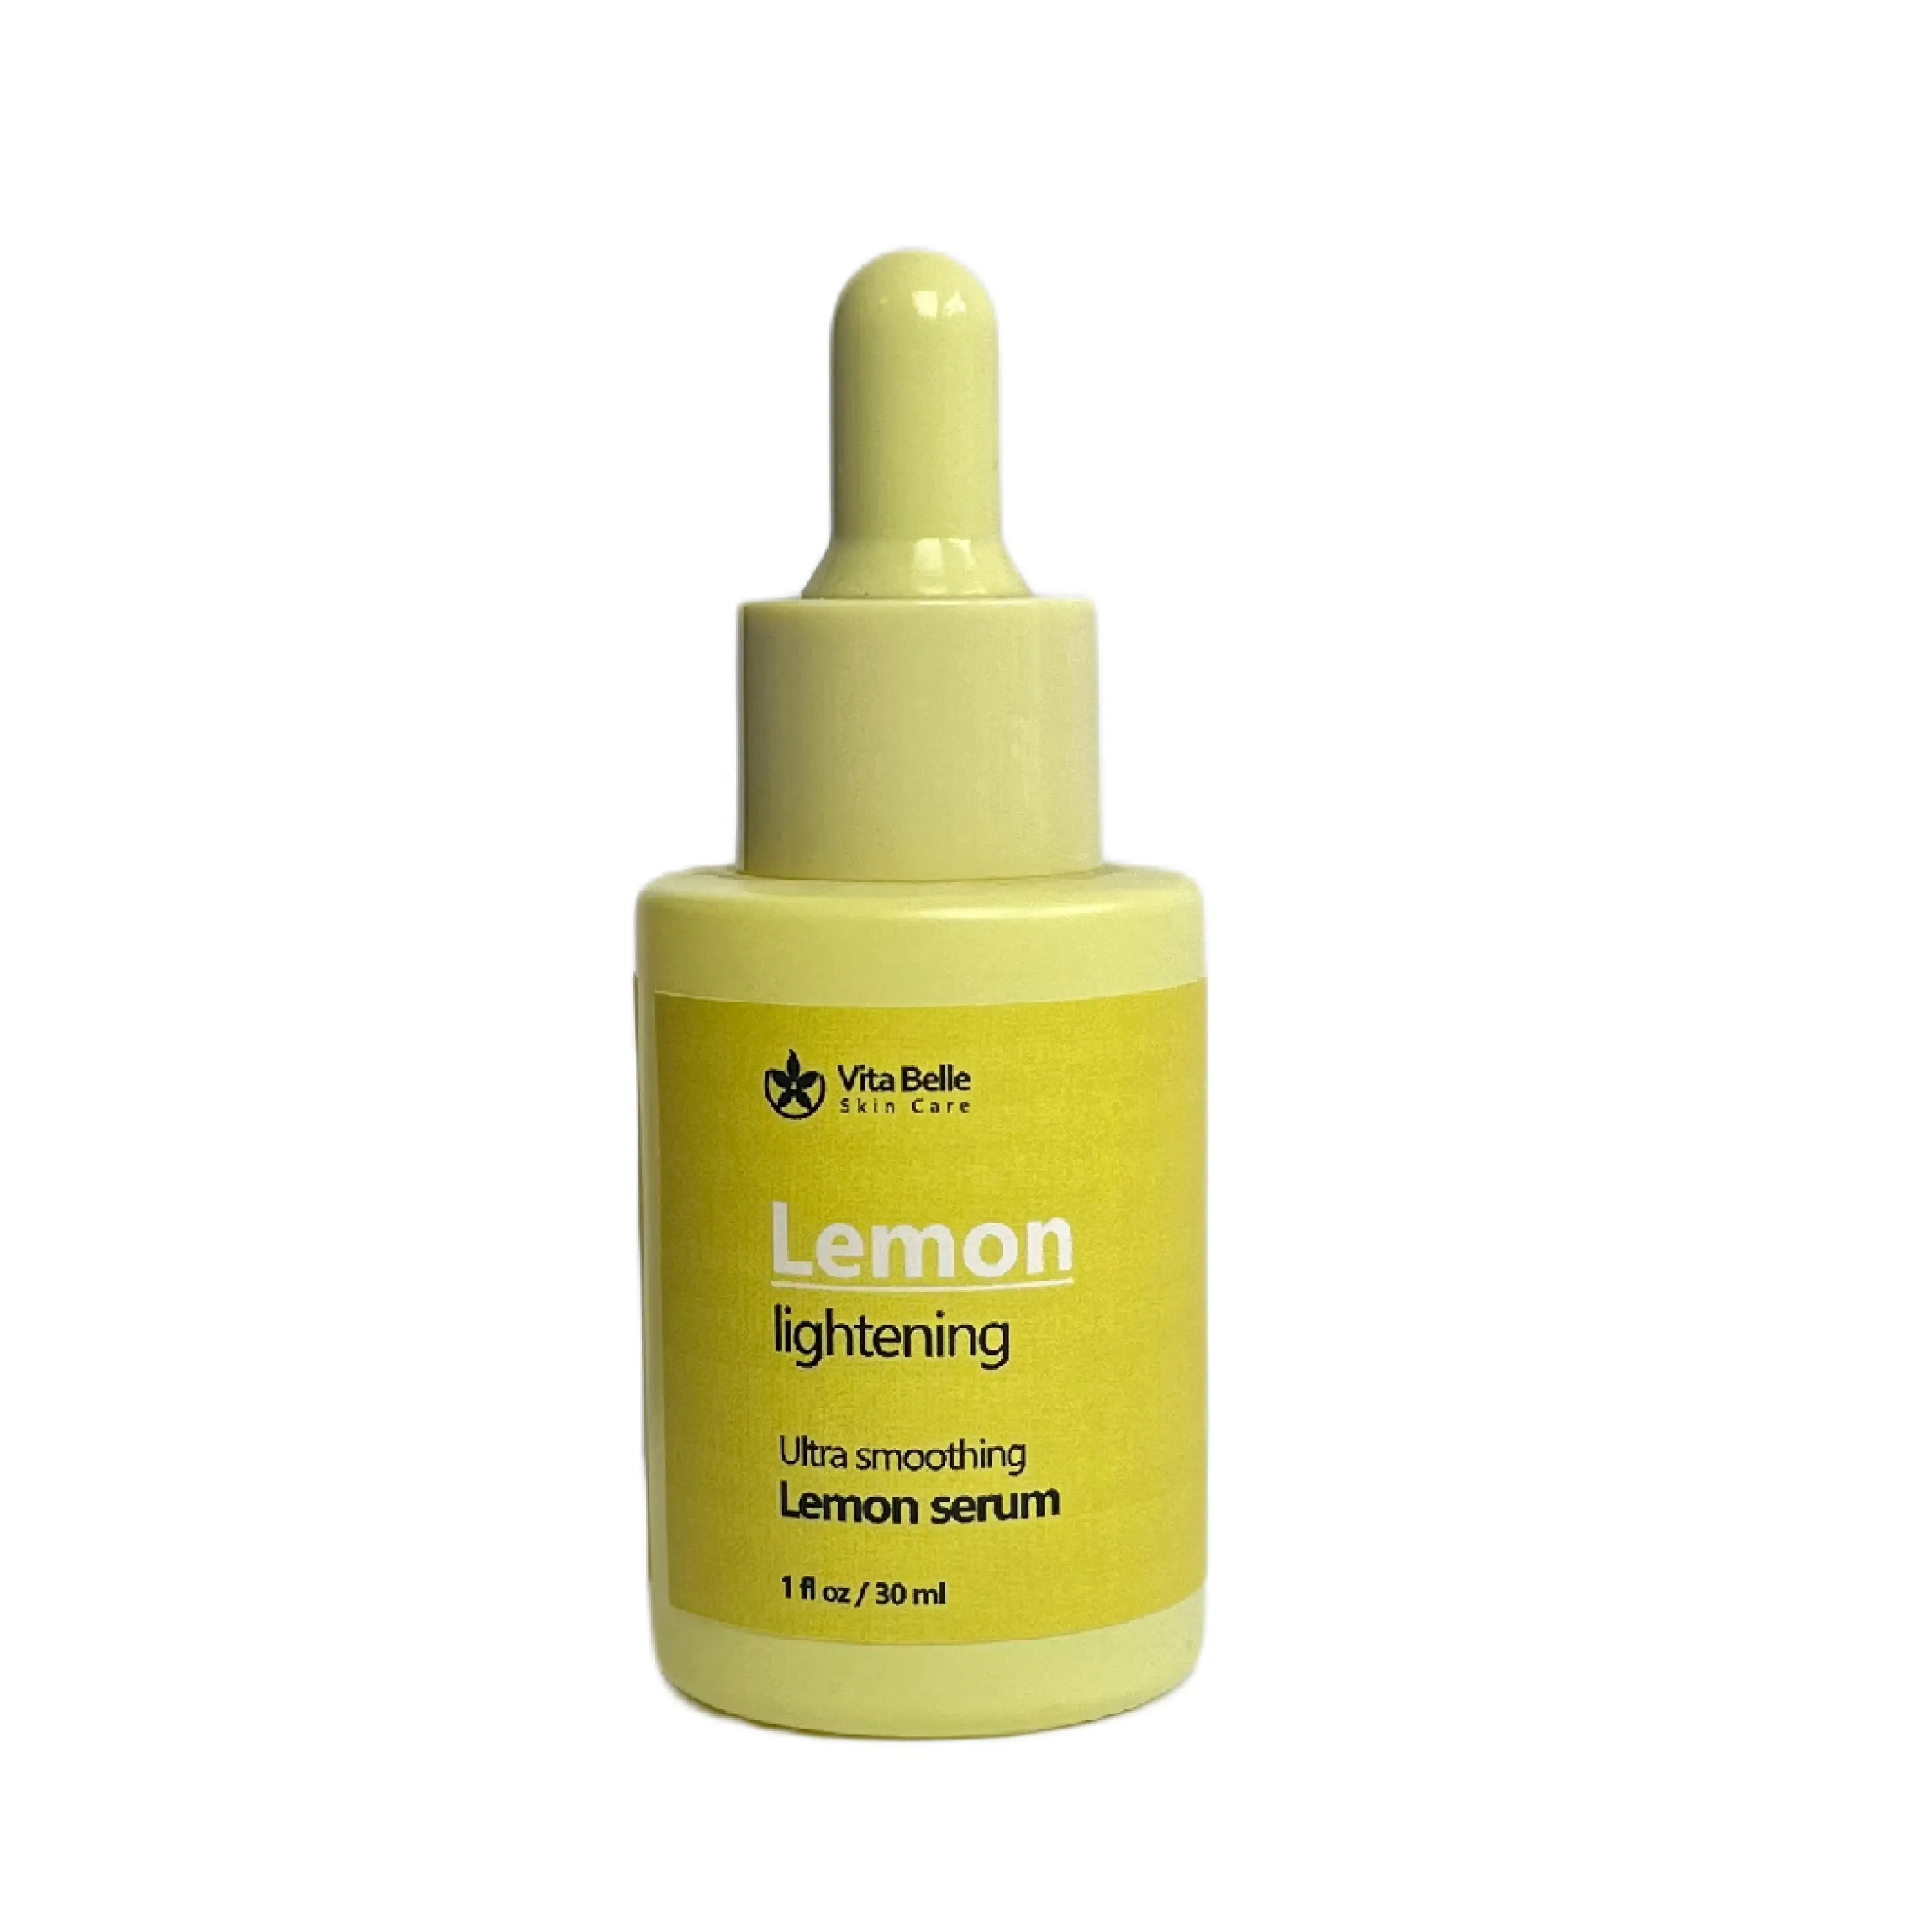 Vitamin C lemon Serum/Anti Aging Serum With Hyaluronic Acid, Pure Vitamin E Oil and Rosehip Oil